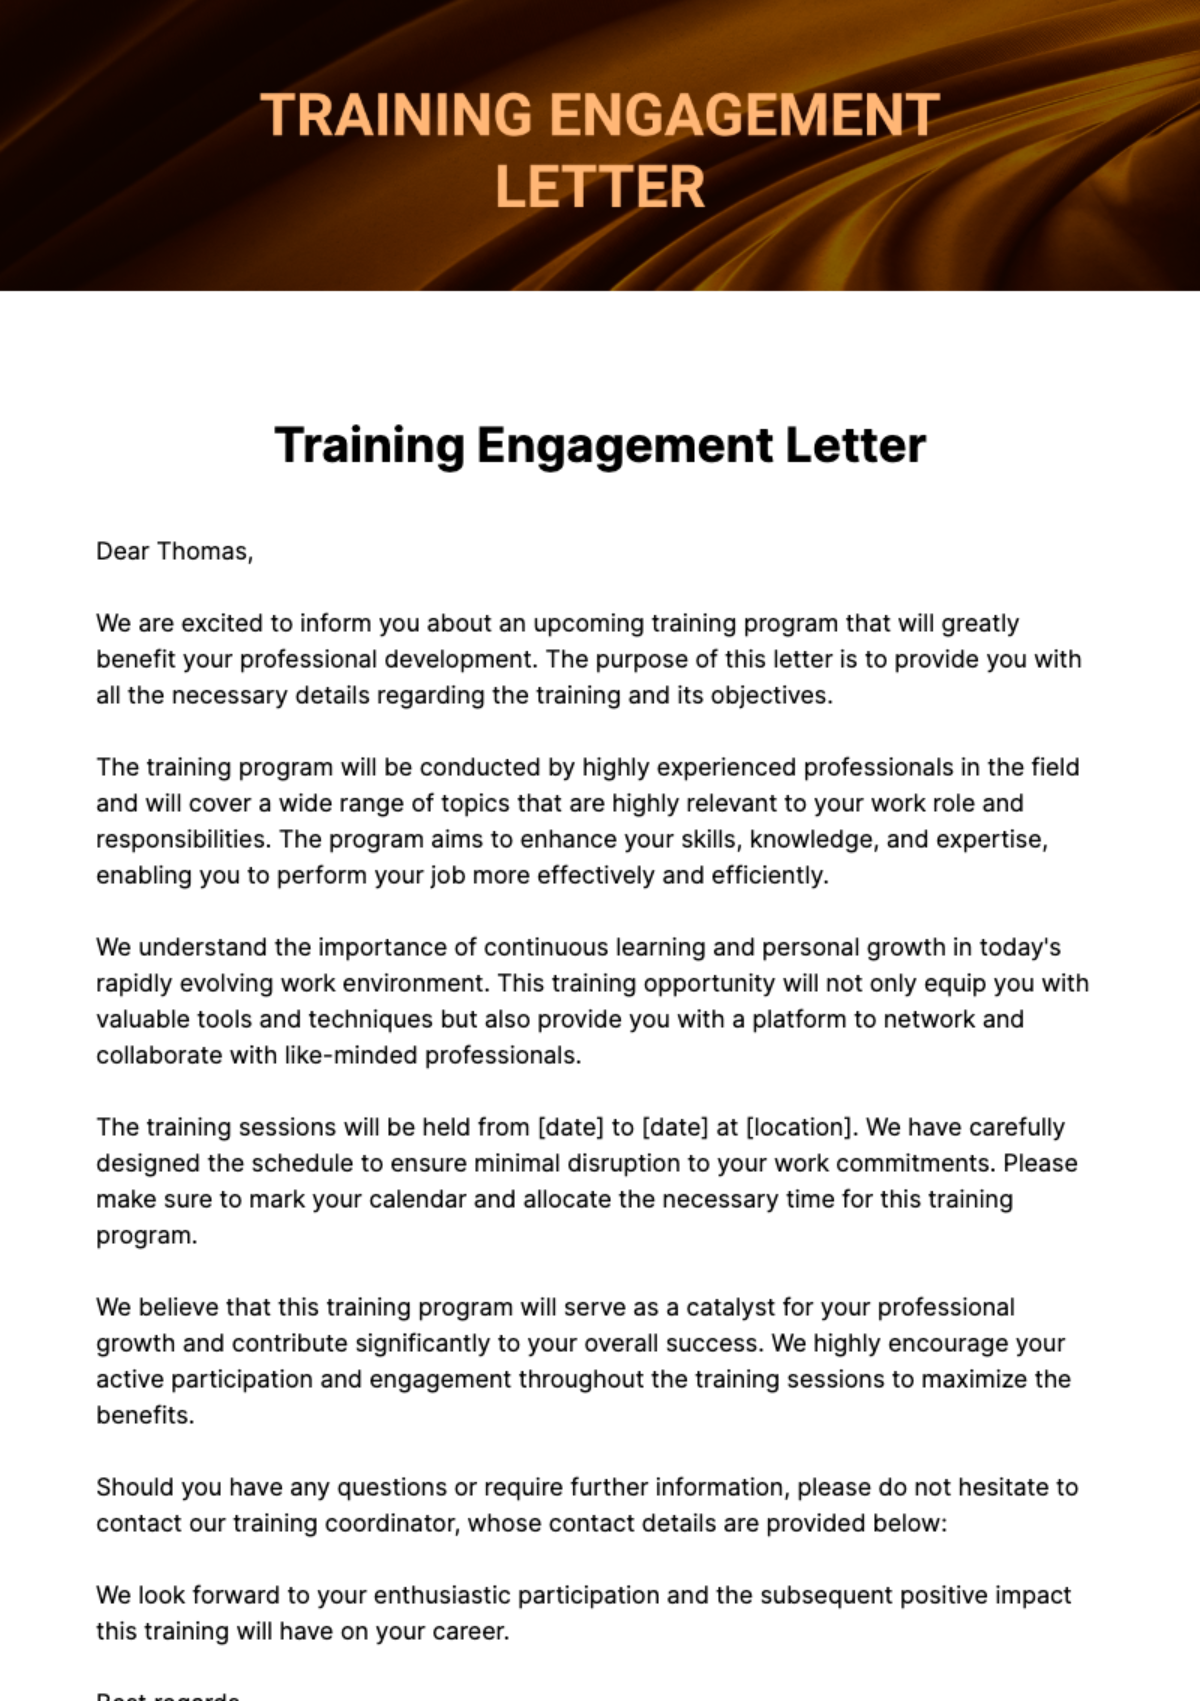 Training Engagement Letter Template